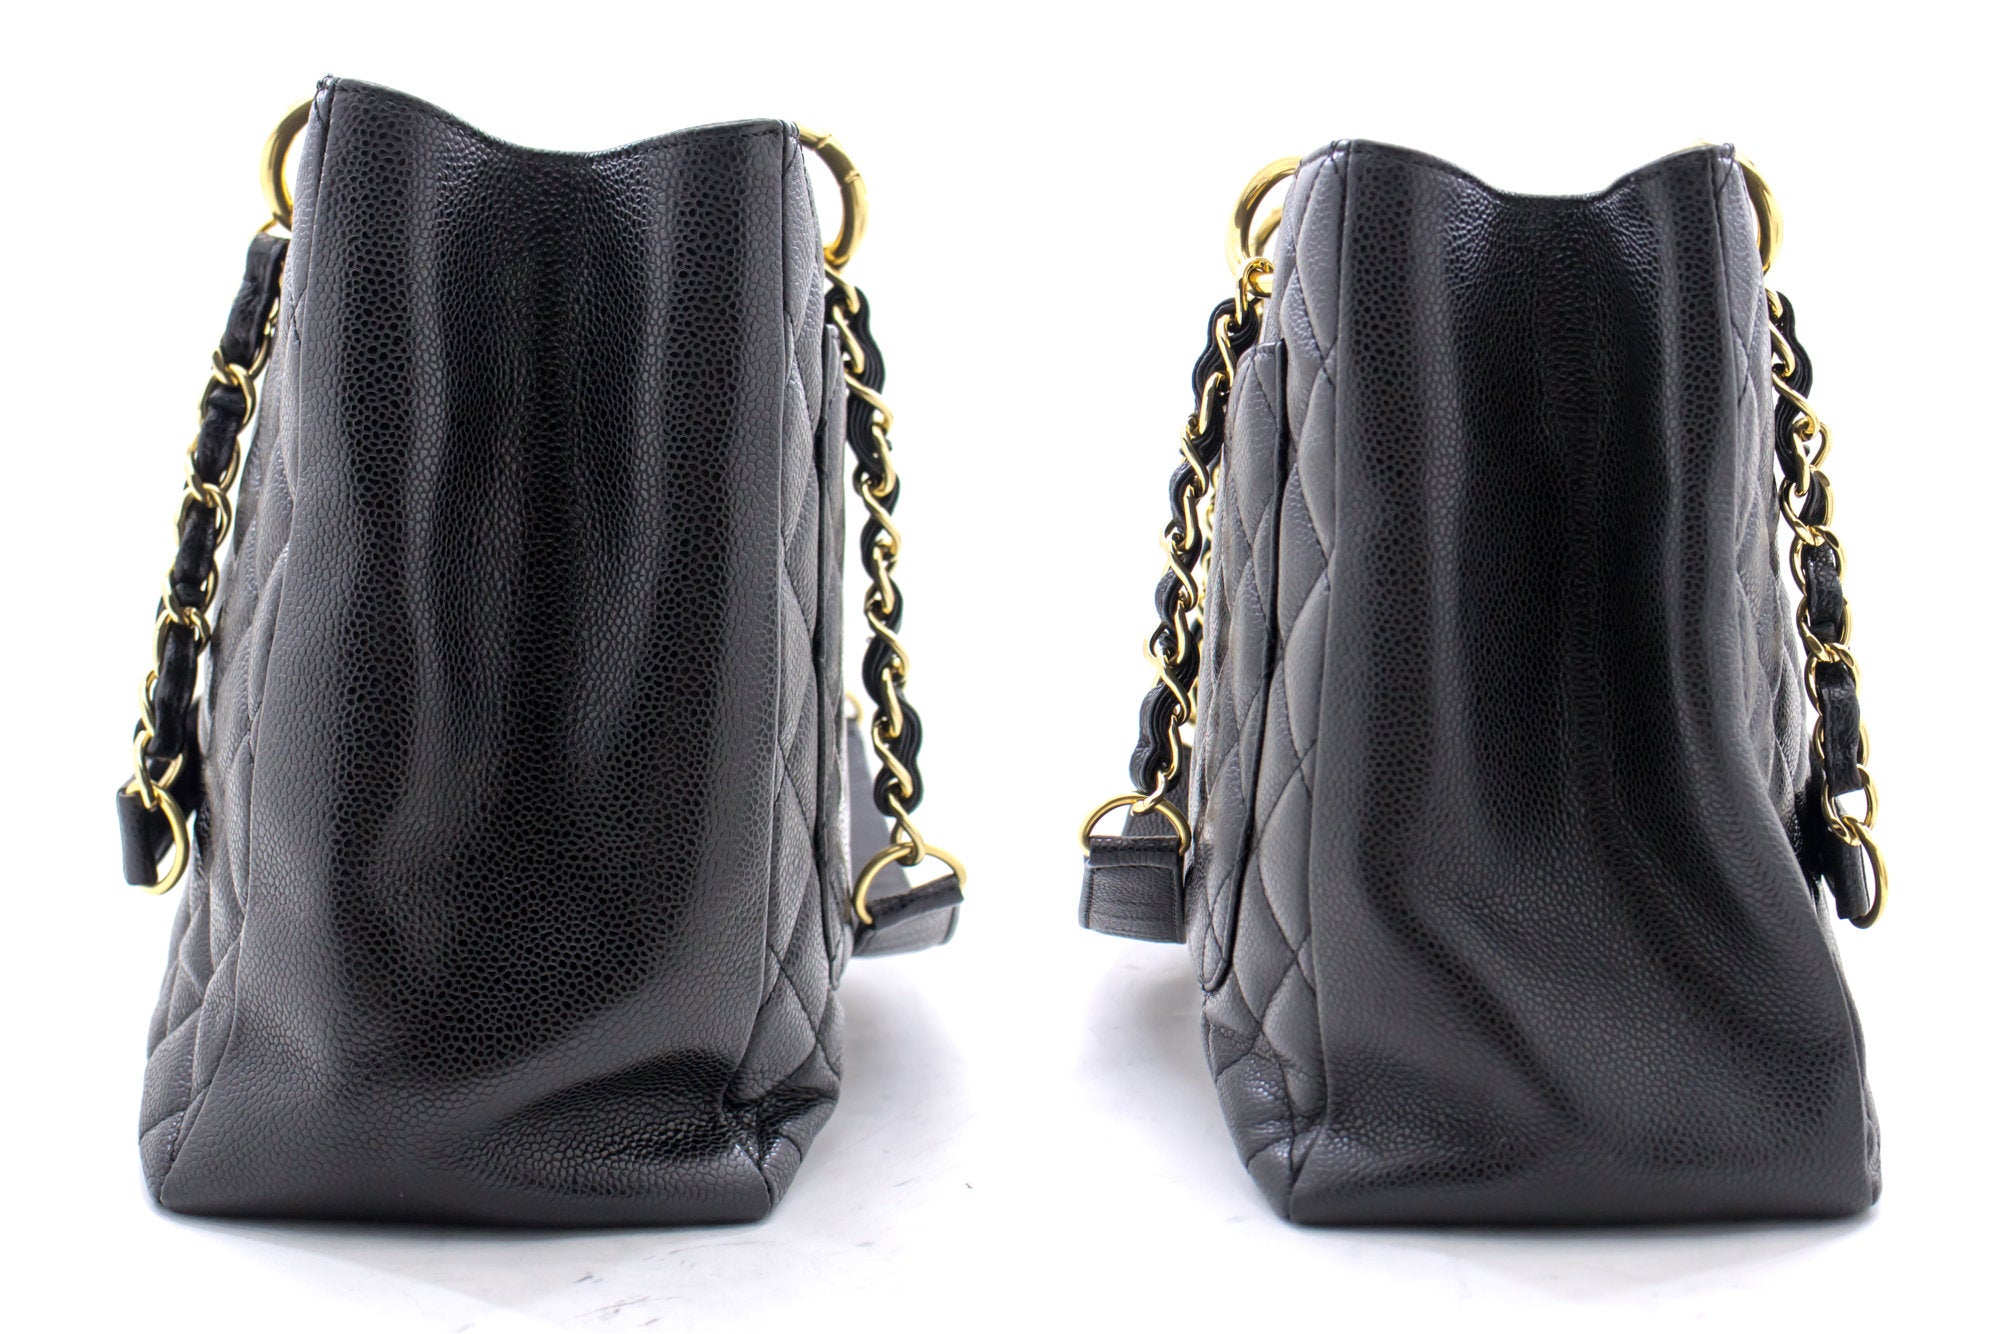 CHANEL Caviar GST 13 Grand Shopping Tote Chain Shoulder Bag Black i89 –  hannari-shop